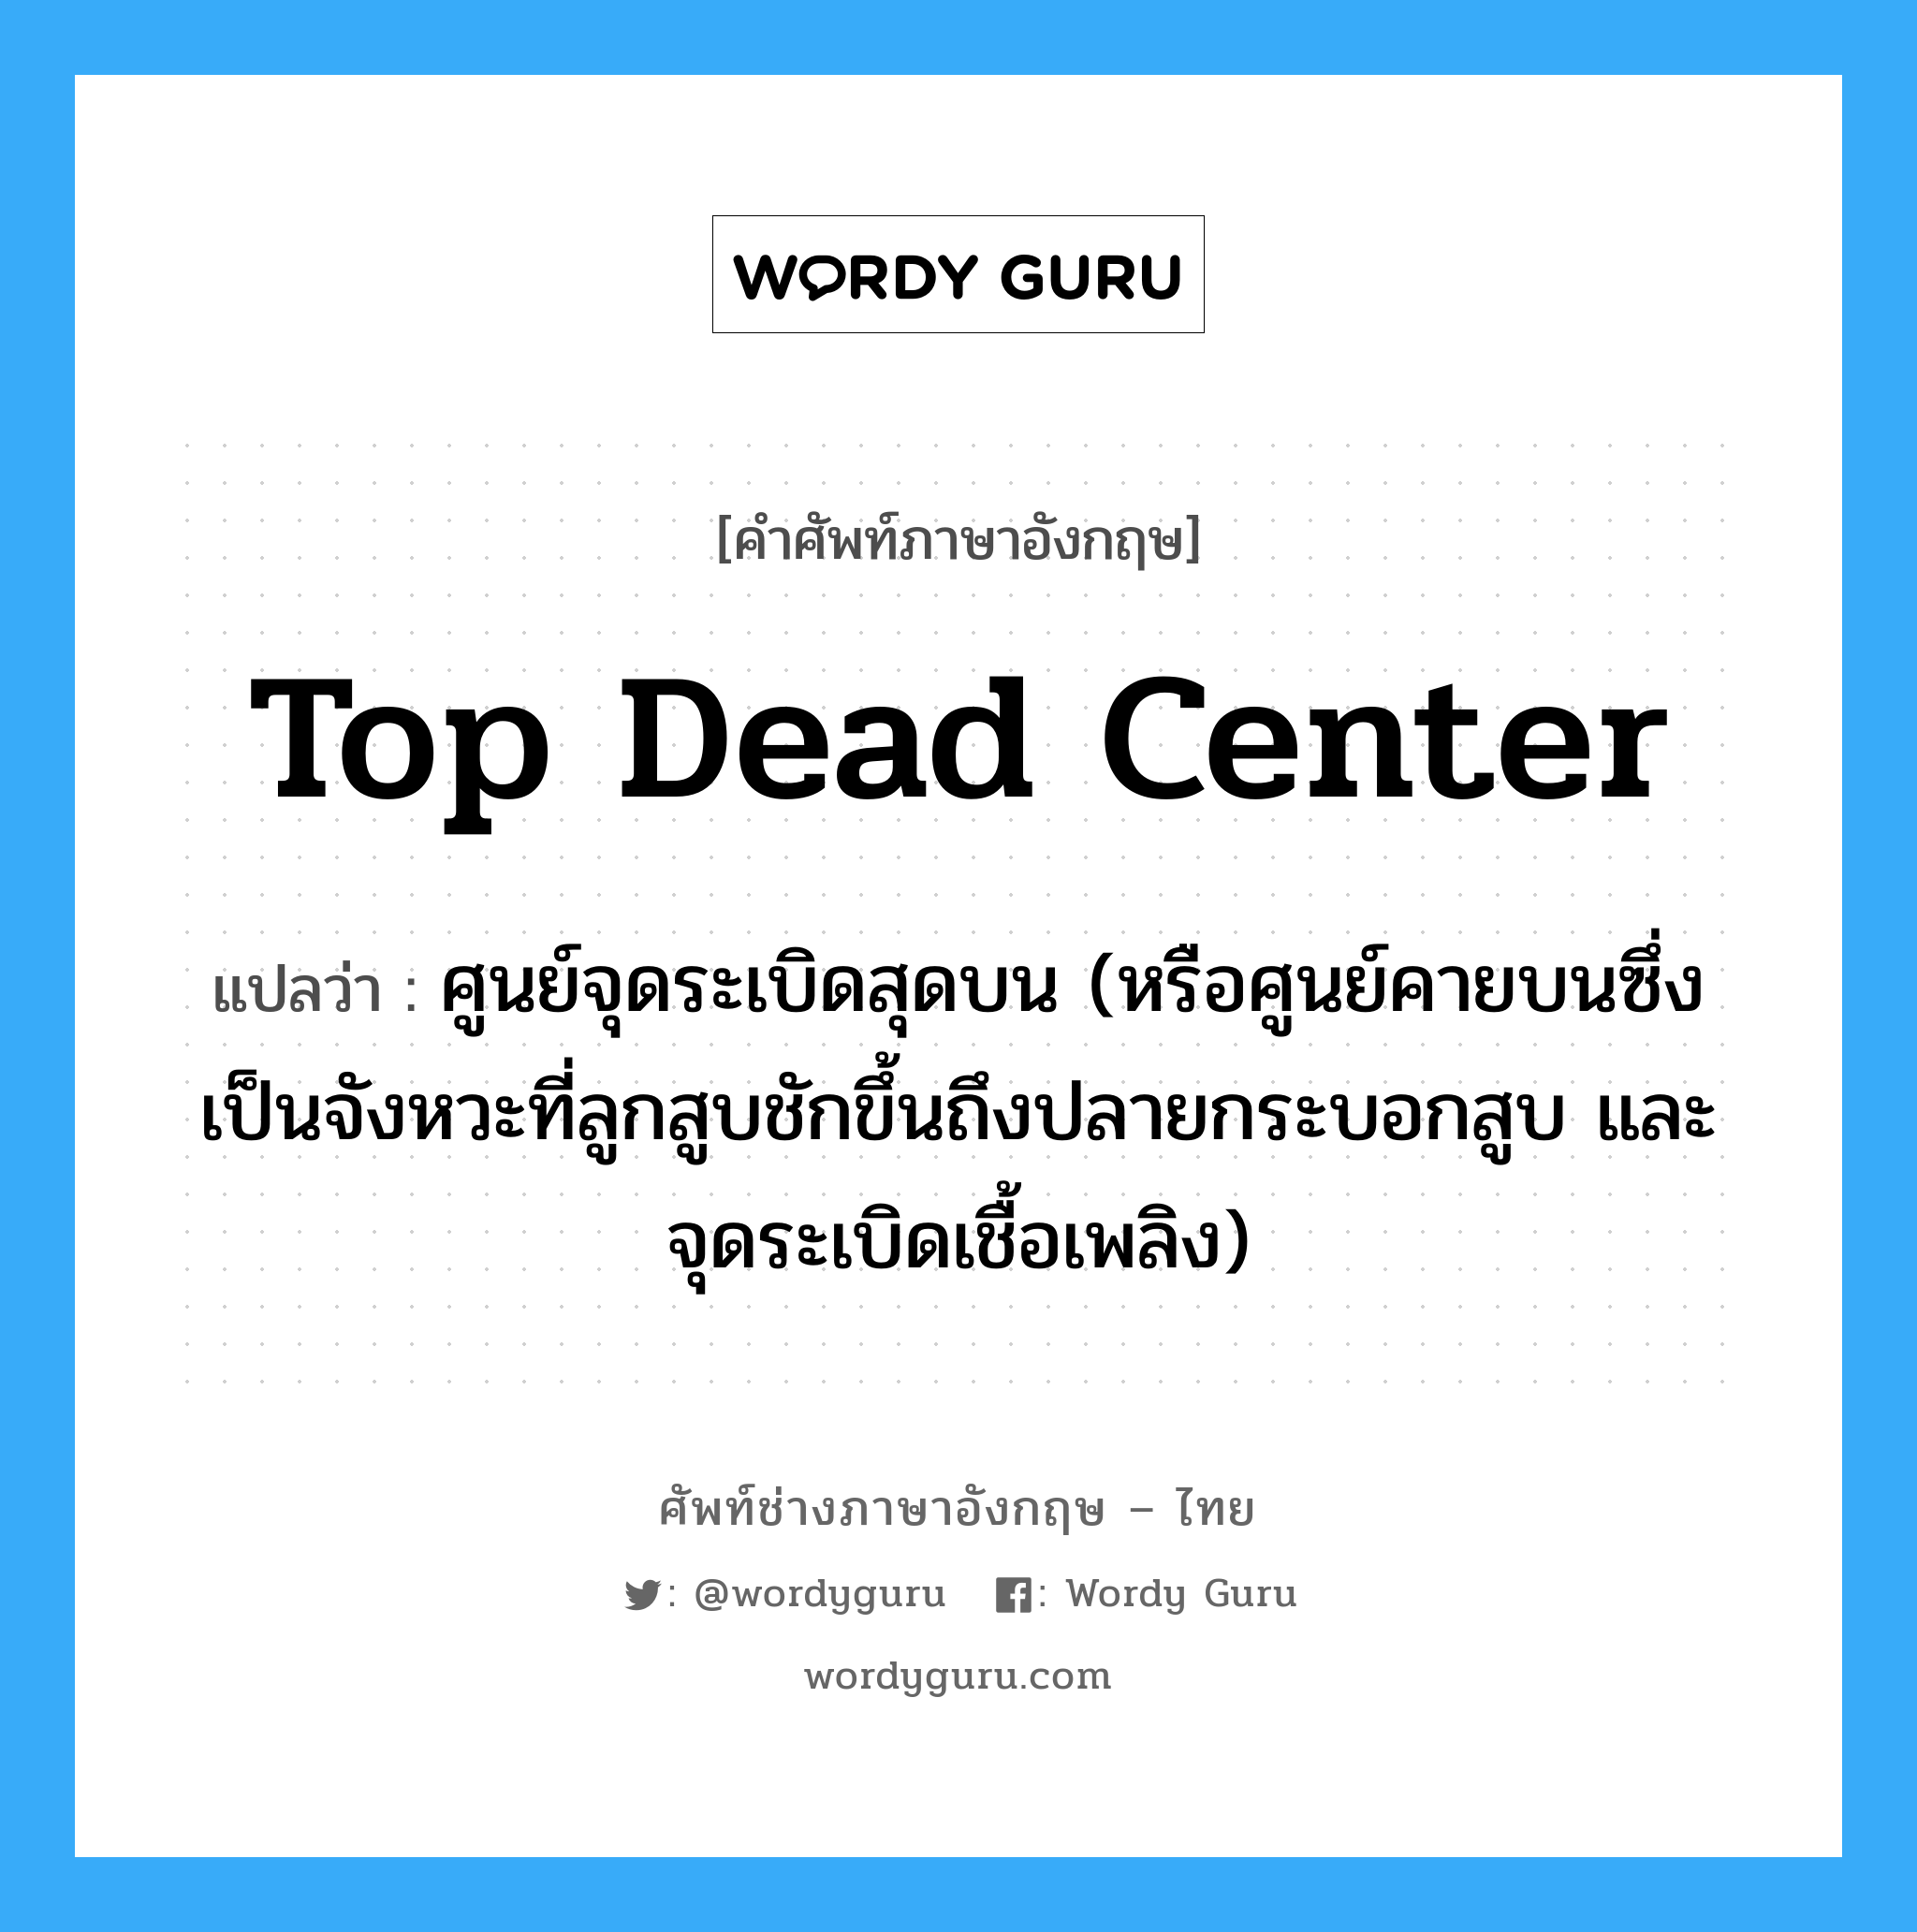 top dead center แปลว่า?, คำศัพท์ช่างภาษาอังกฤษ - ไทย top dead center คำศัพท์ภาษาอังกฤษ top dead center แปลว่า ศูนย์จุดระเบิดสุดบน (หรือศูนย์คายบนซึ่งเป็นจังหวะที่ลูกสูบชักขึ้นถึงปลายกระบอกสูบ และจุดระเบิดเชื้อเพลิง)